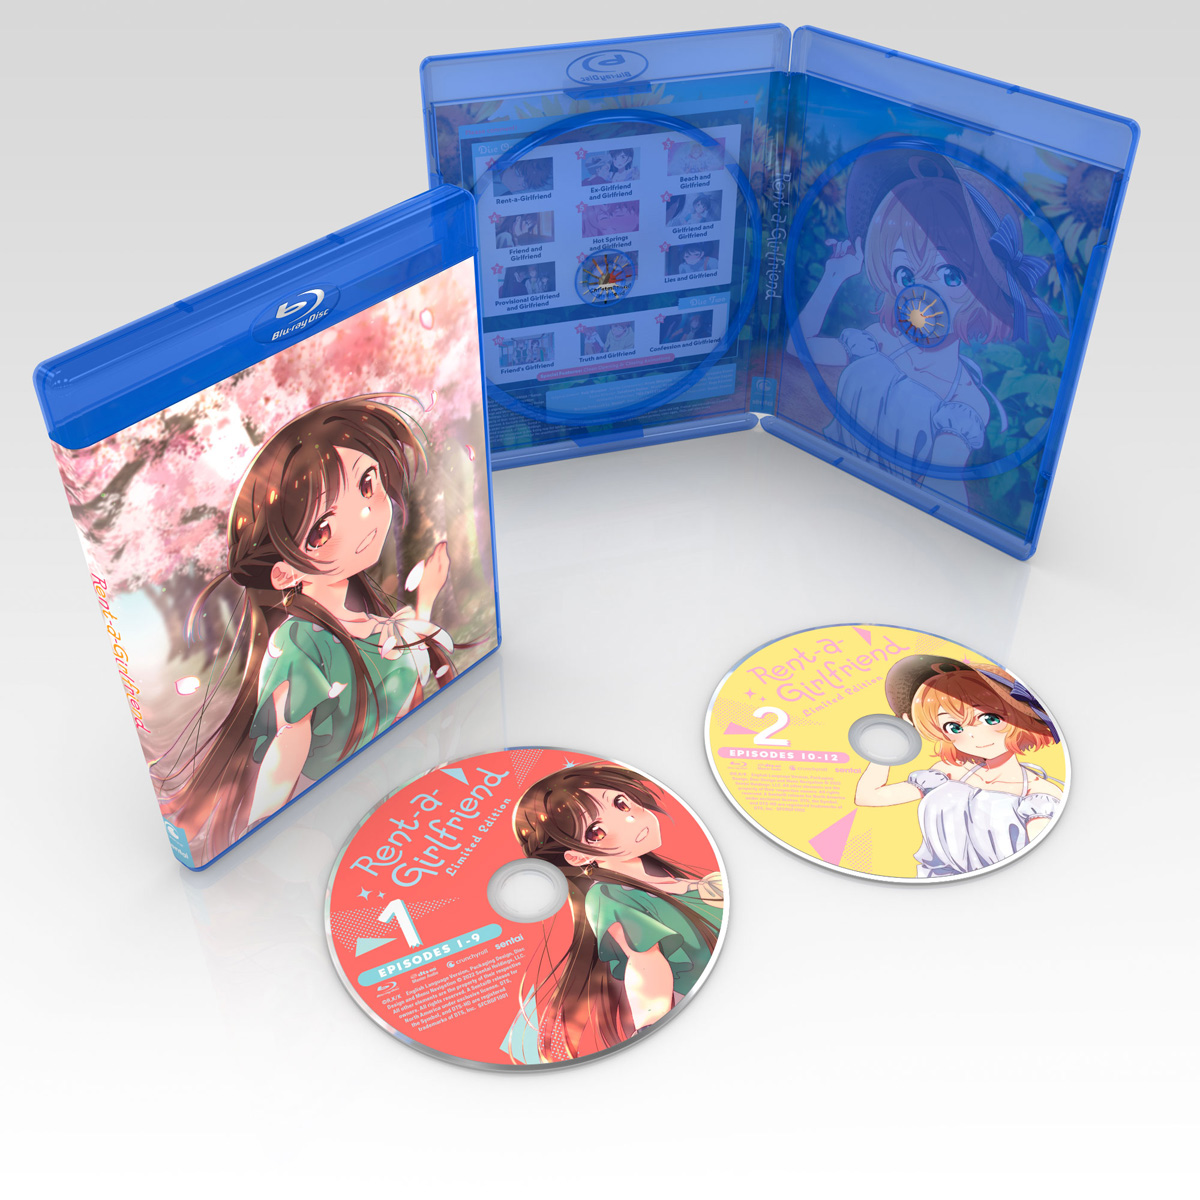 Rent-A-Girlfriend Premium Edition Box Set Blu-ray | Crunchyroll Store